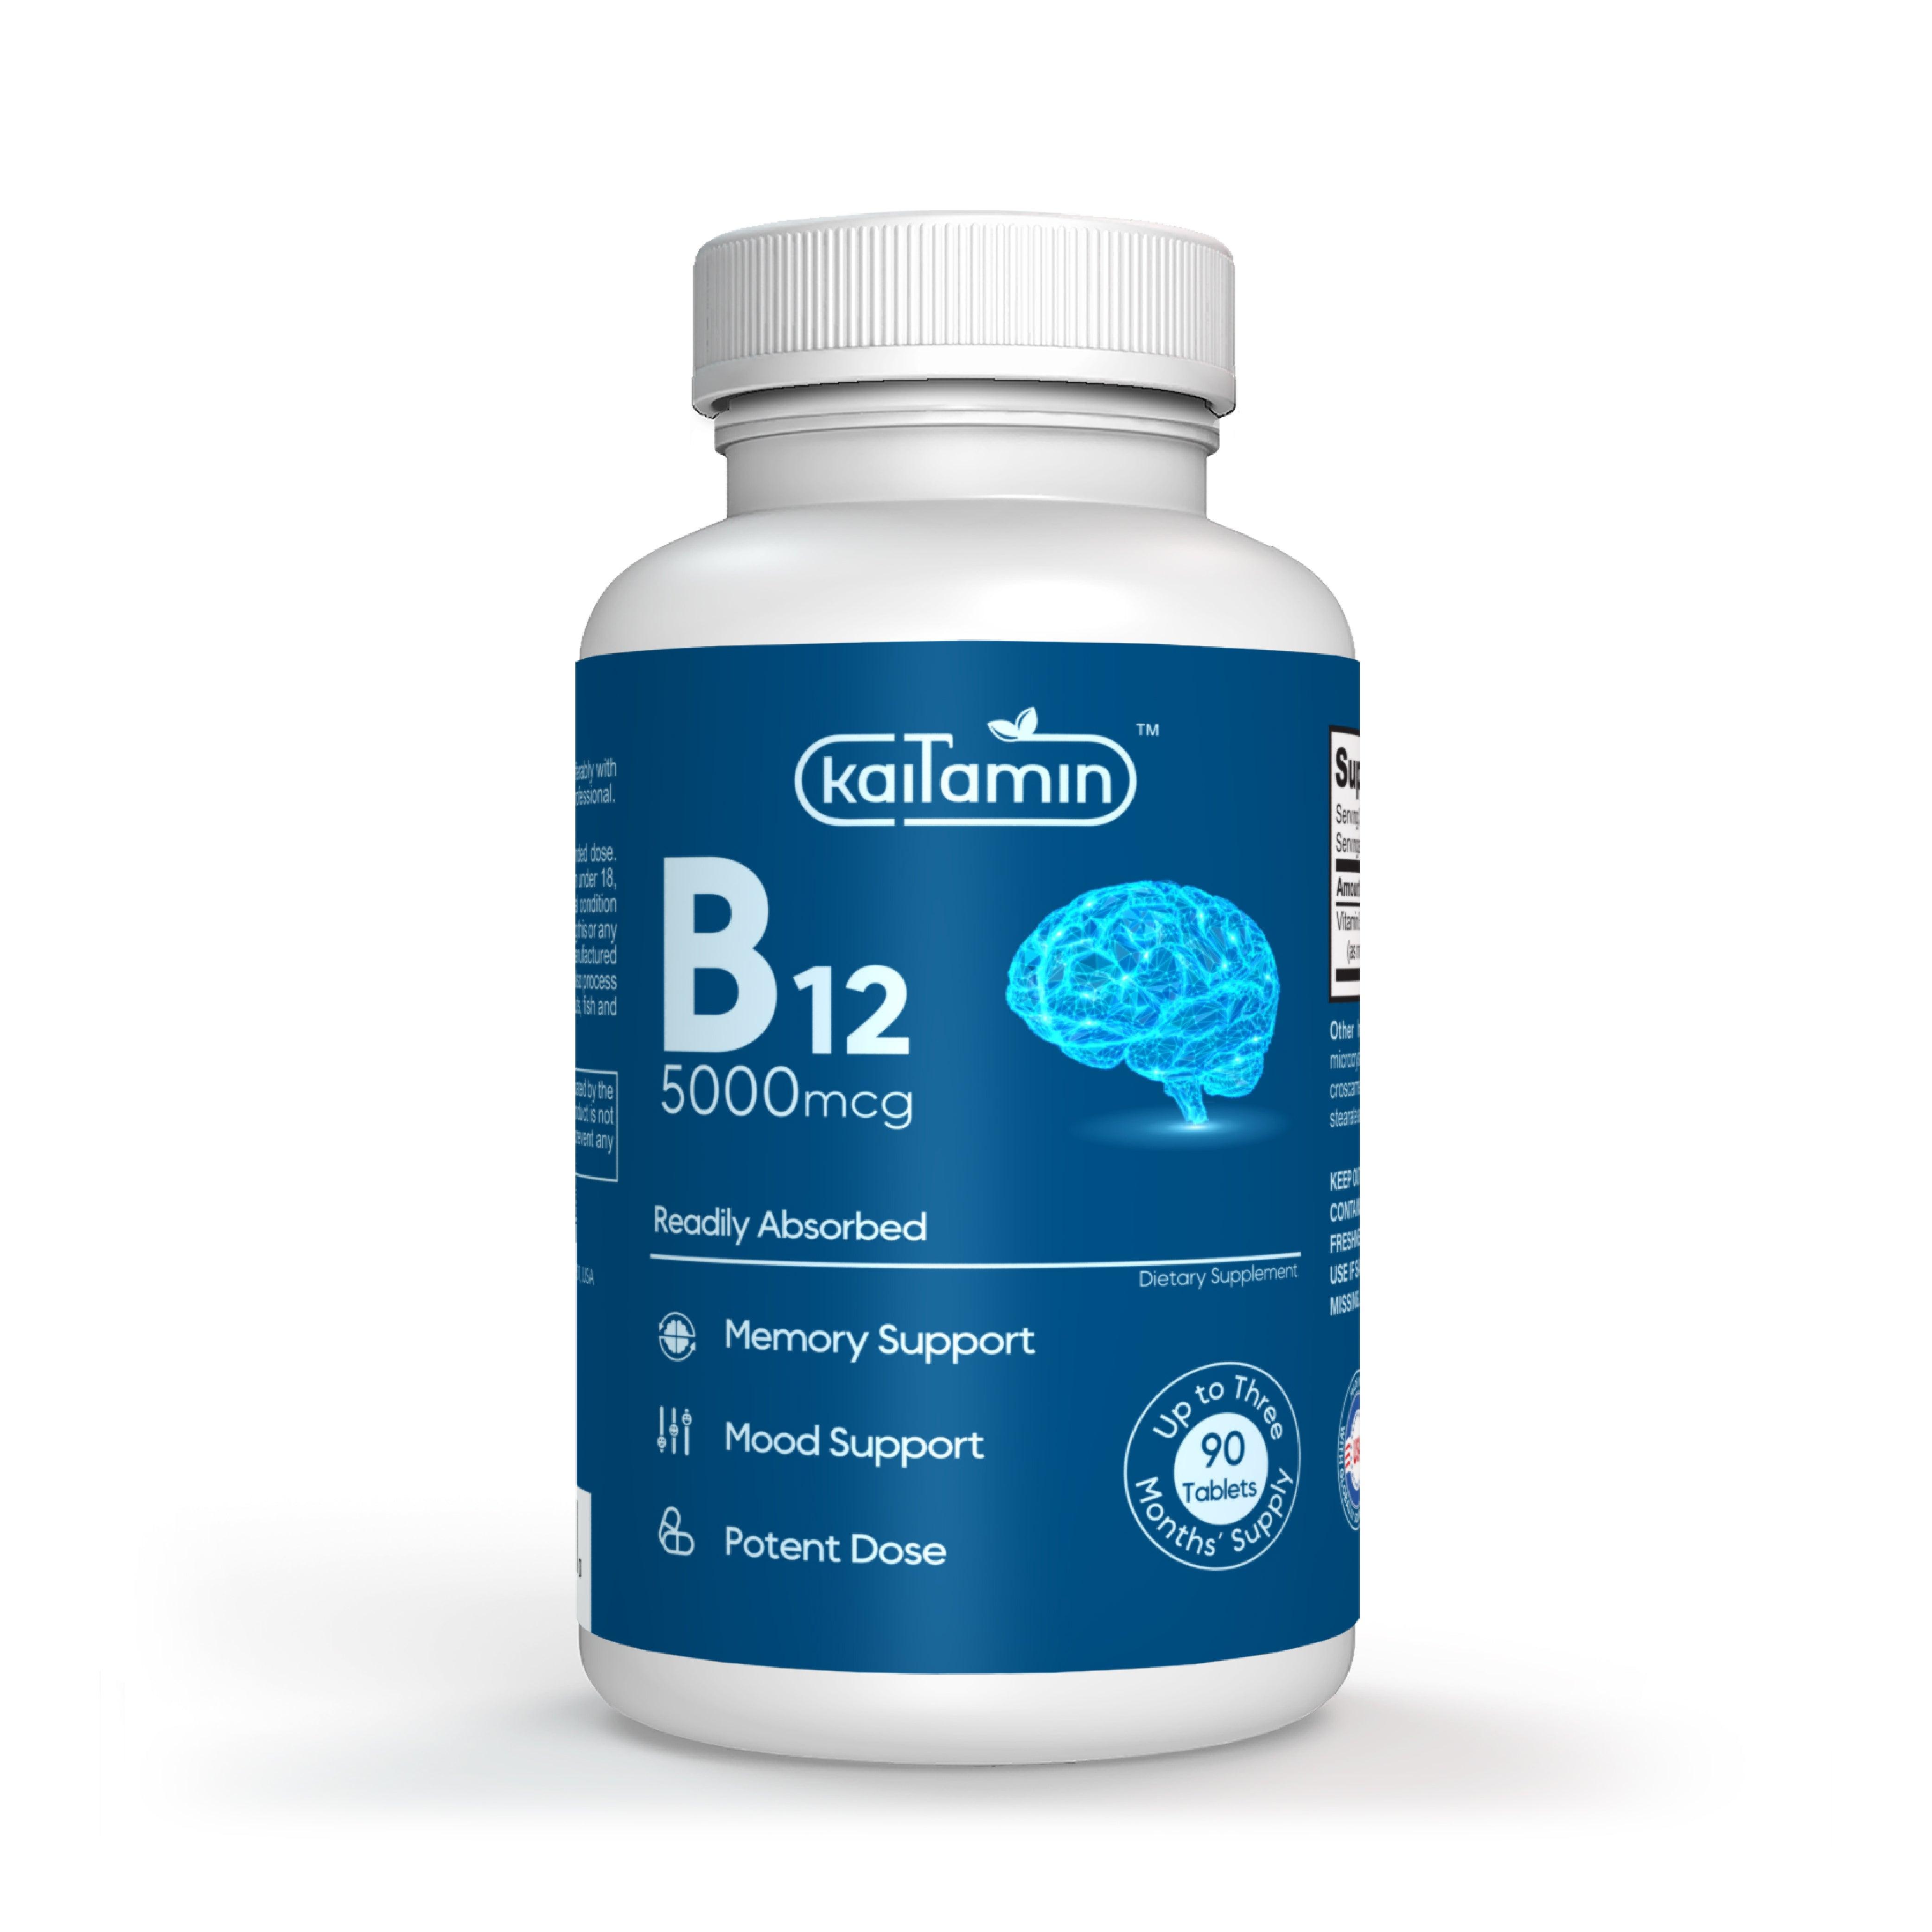 B12 5000mcg - Methylcobalamin for Memory, Mood and Energy - 90 Tablets - Kaitamin